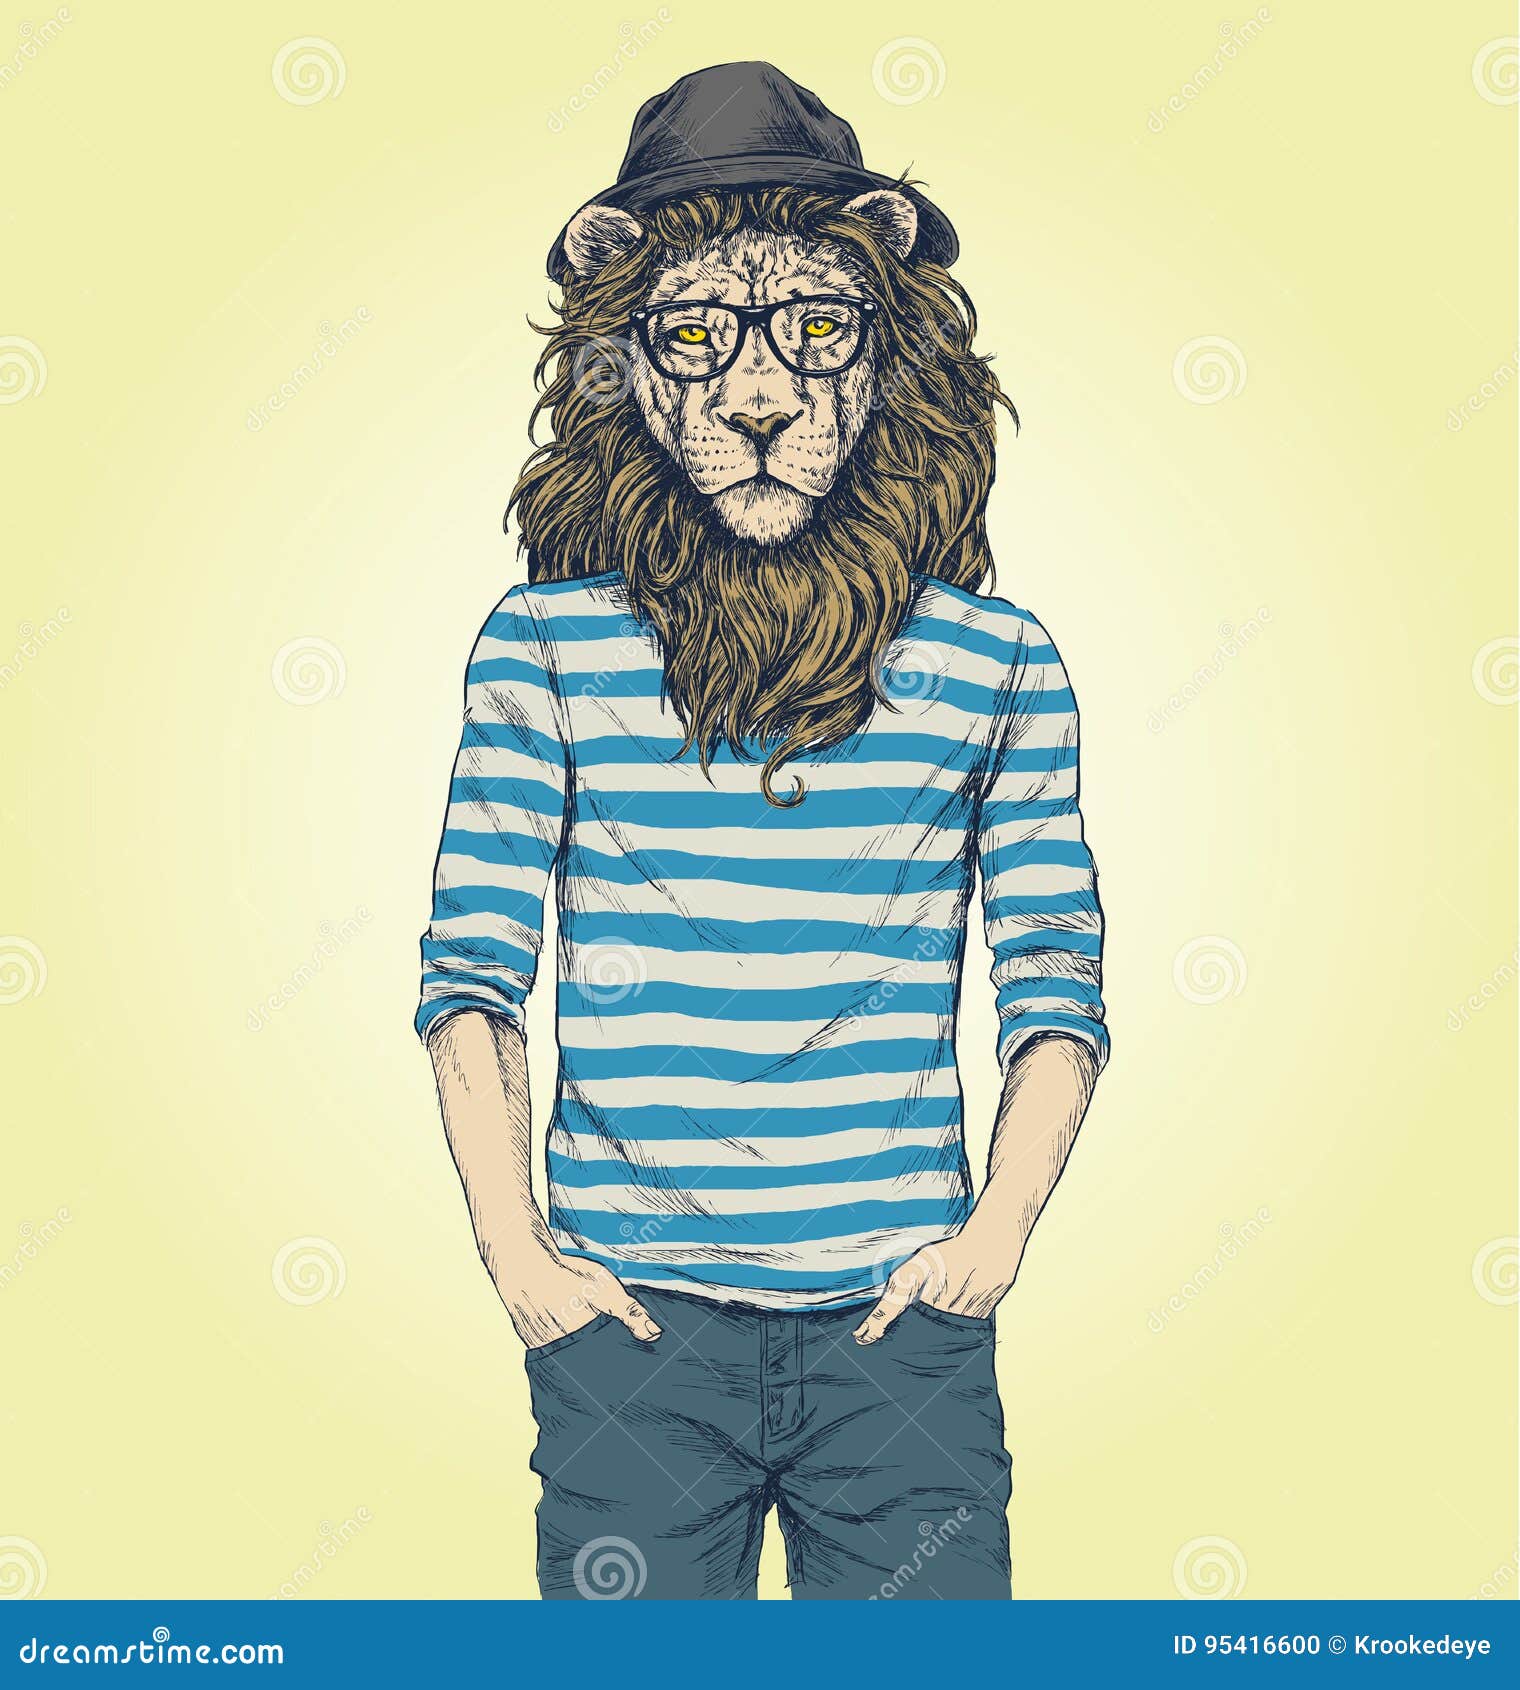 hipster lion  